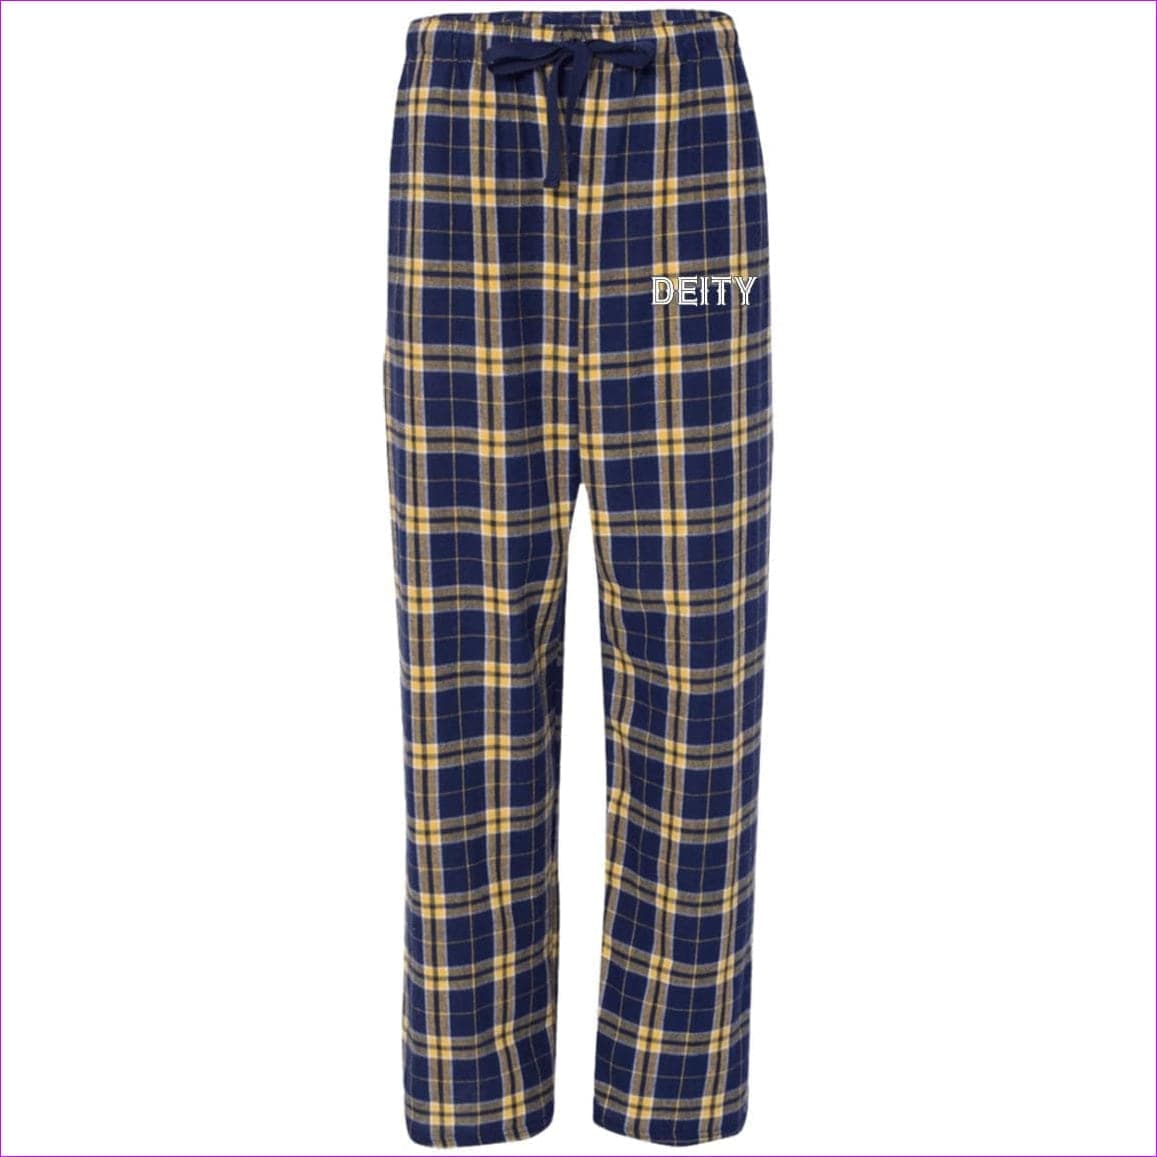 Navy/Gold Deity Flannel Pants - unisex pajamas Pants at TFC&H Co.